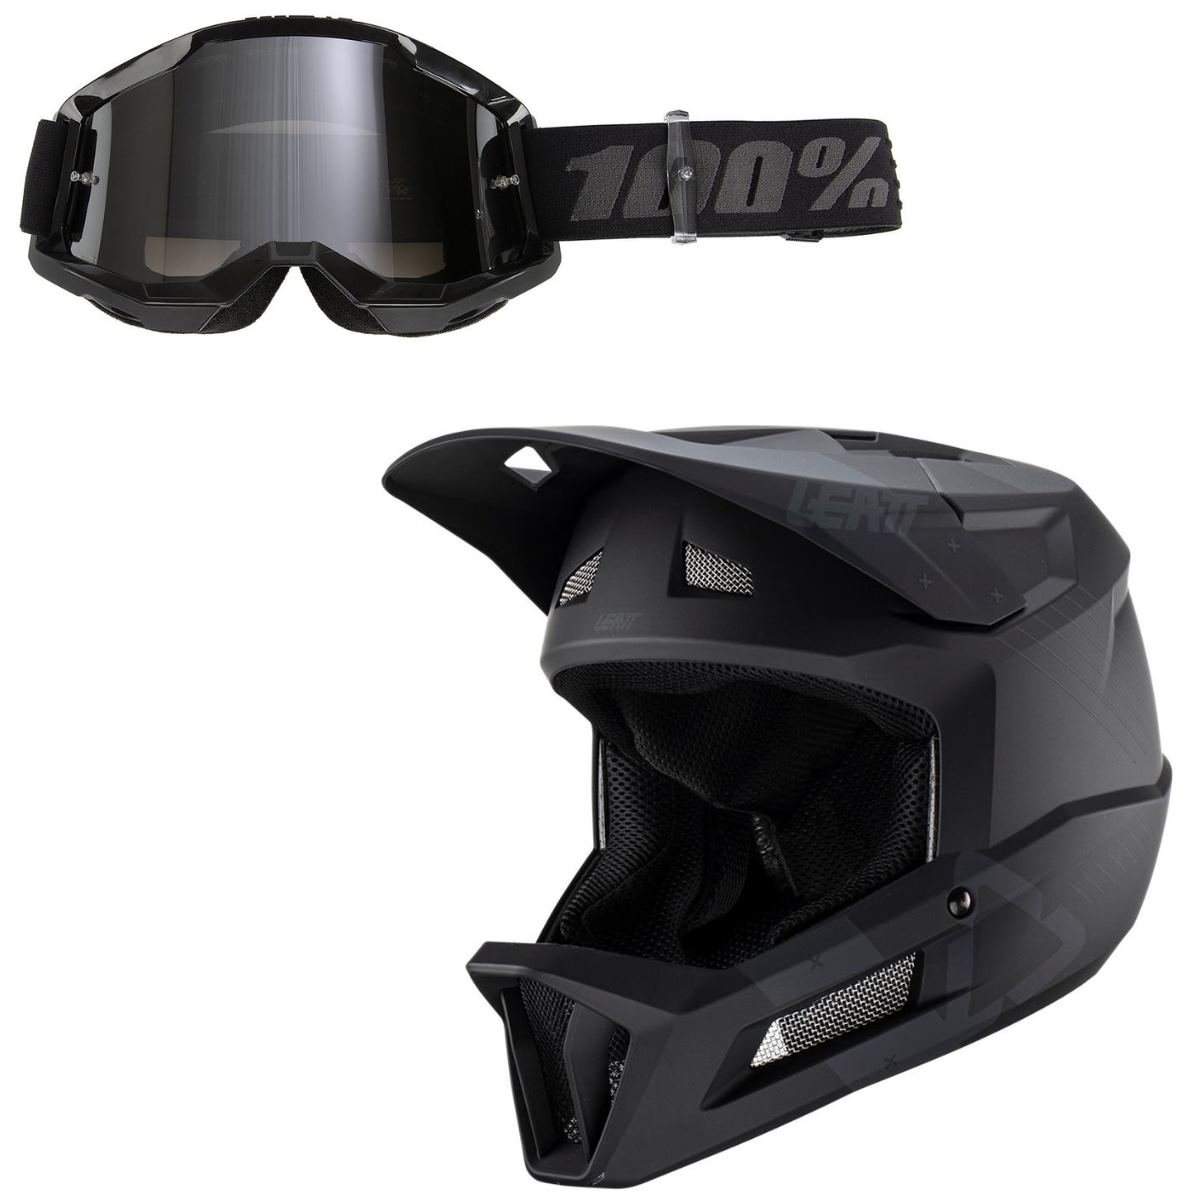 Leatt Downhill Helm-Kit 2.0 Gravity / Strata Gen. 2 Set: 2-teilig, Schwarz/Grau, Mirror Silver